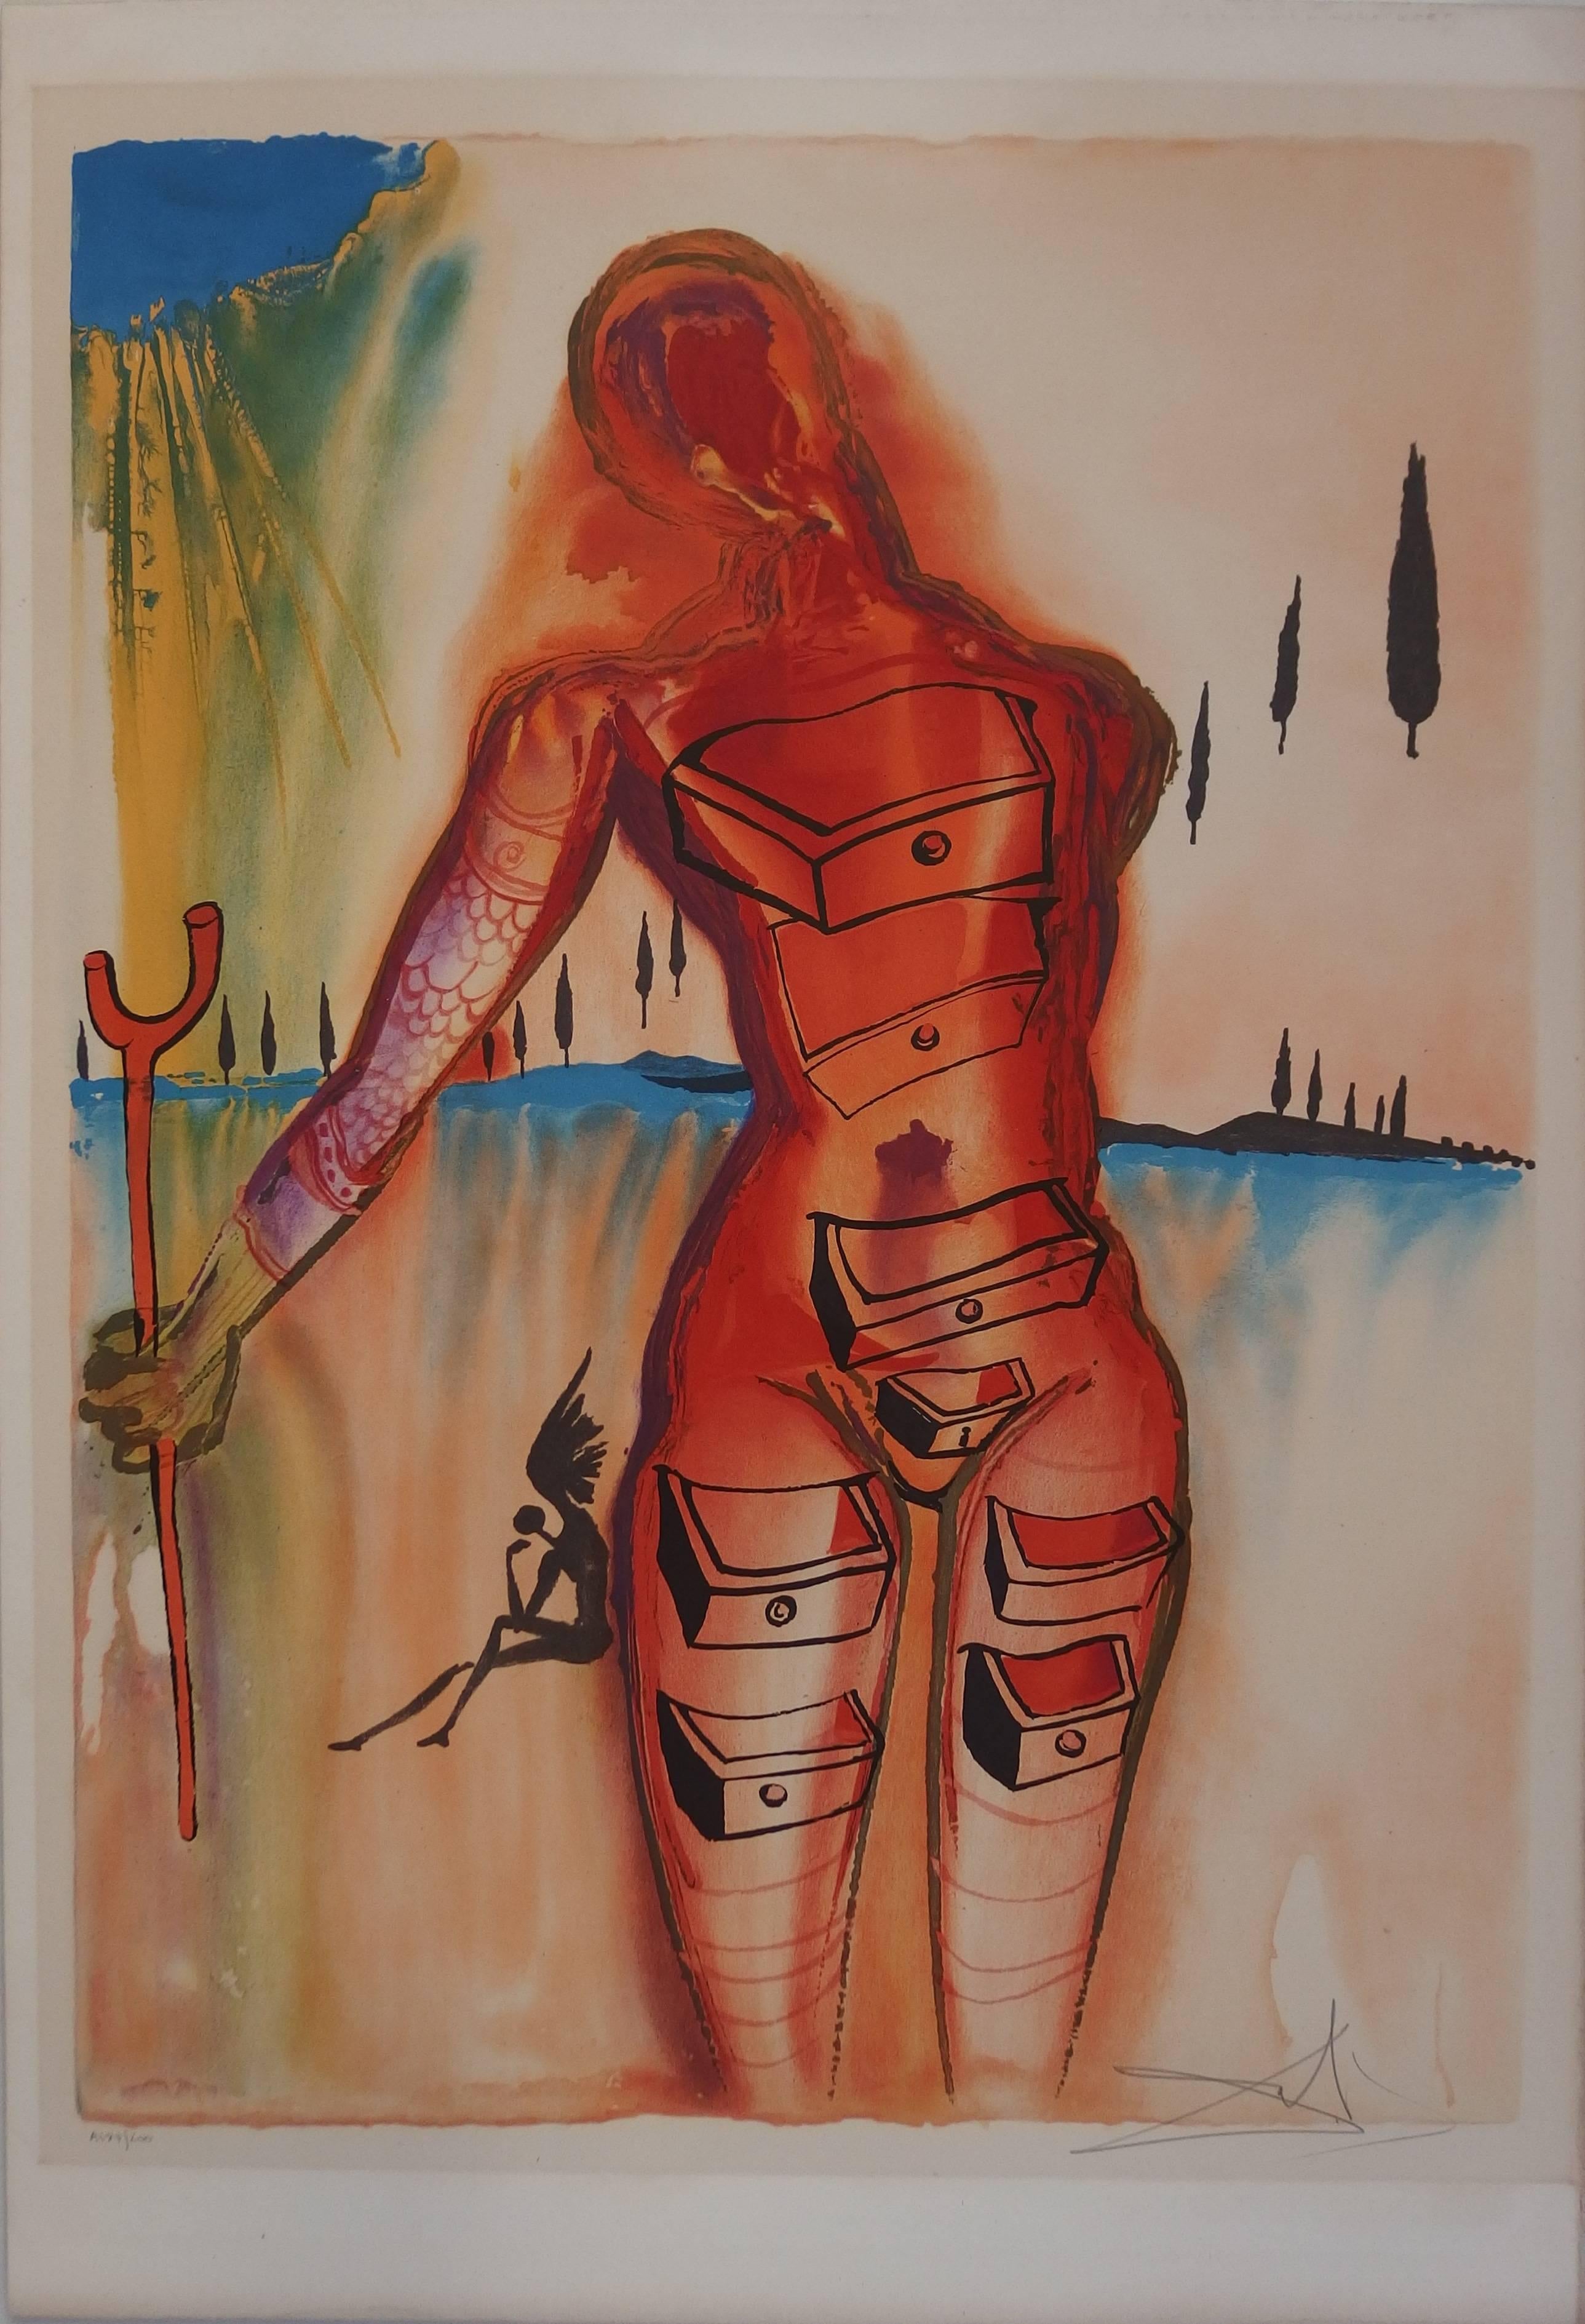 Salvador Dalí Nude Print - Port Lligat : Venus With Drawers - Original handsigned lithograph - 200 copies